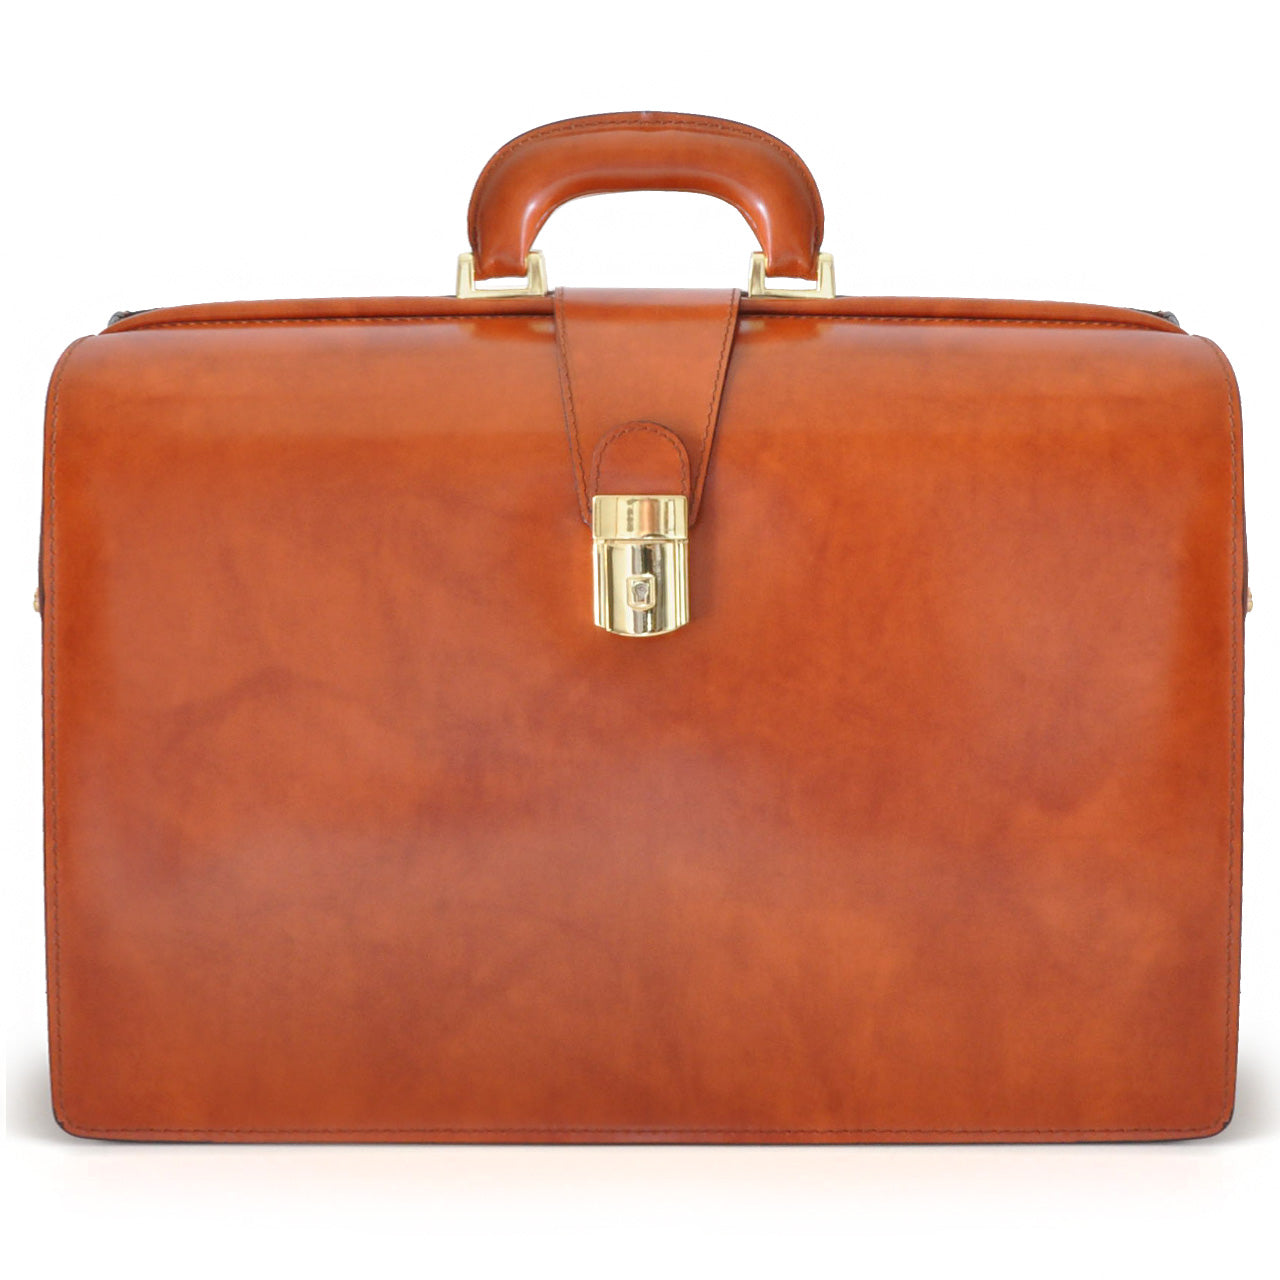 Pratesi Leonardo Briefcase in genuine Italian leather